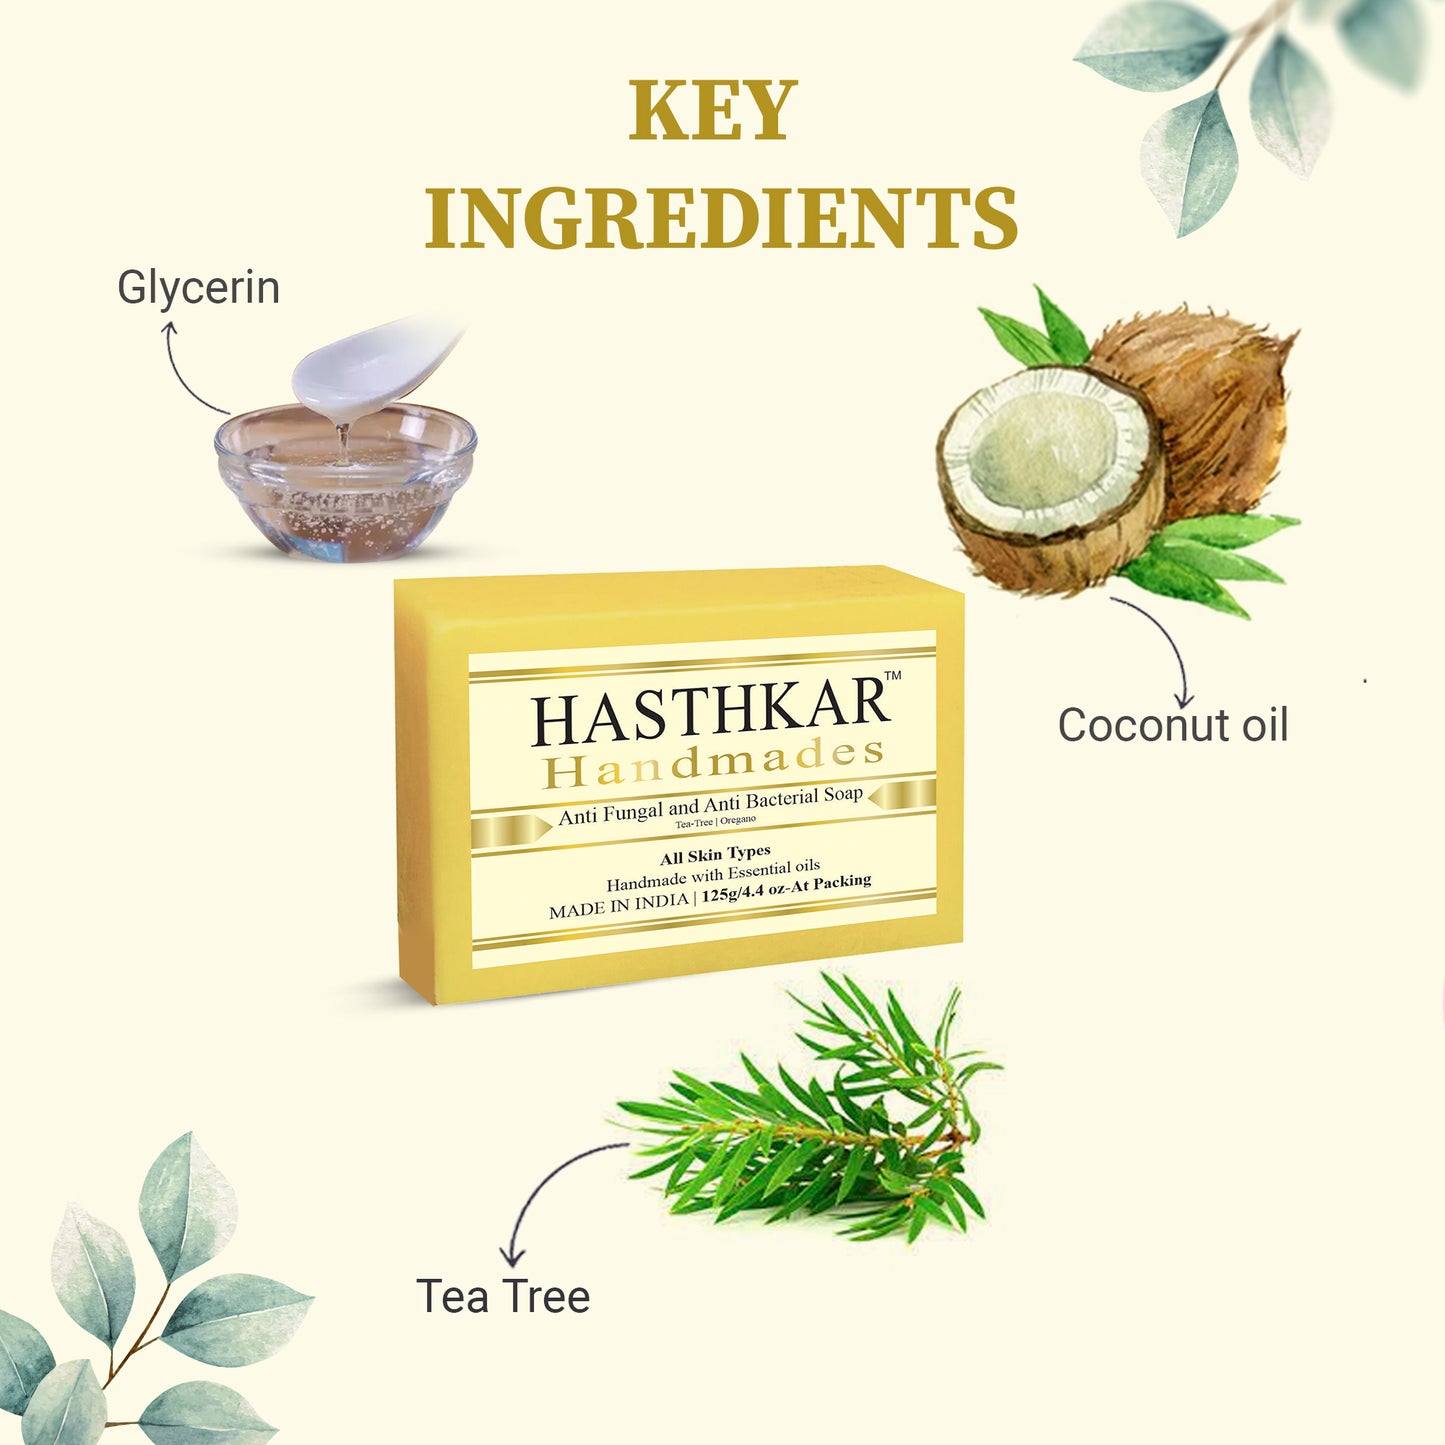 Hasthkar Handmades Glycerine Anti fungal anti becterial Soap 125gm Pack of 5